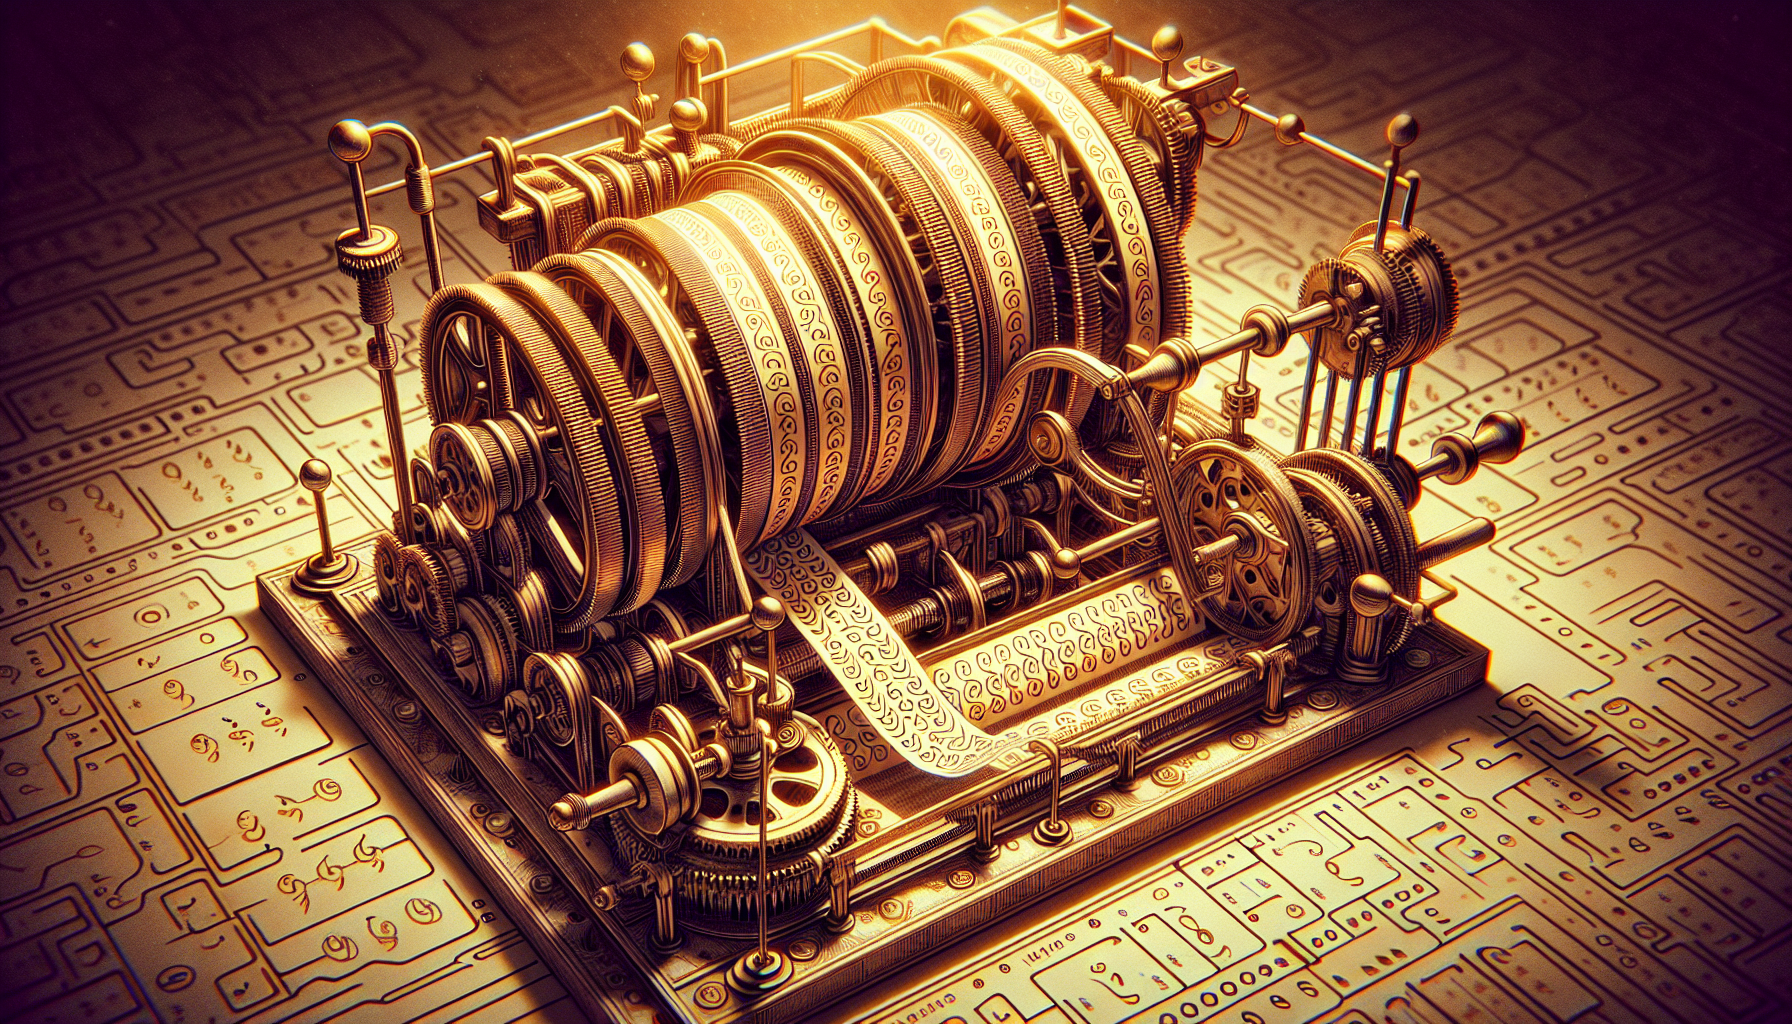 Illustration of a universal Turing machine